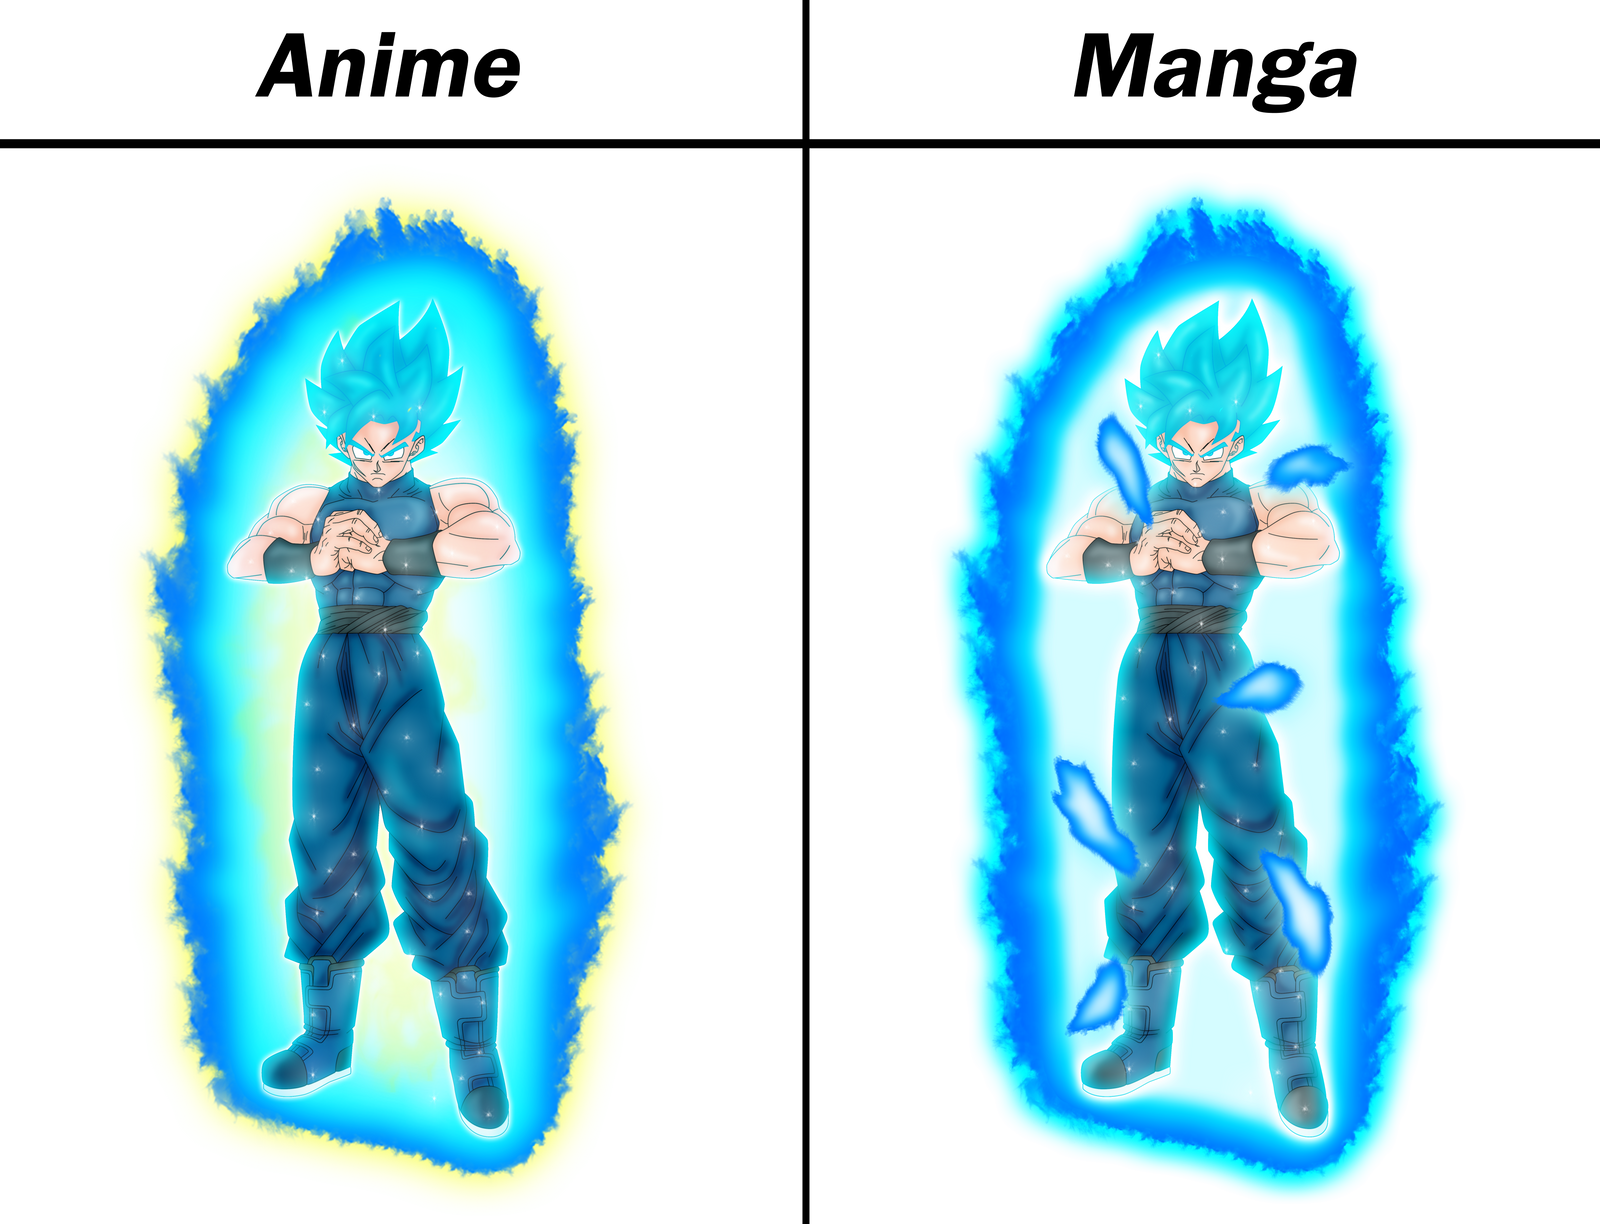 Free download  Goku Super Saiyajin Blue Movie transparent